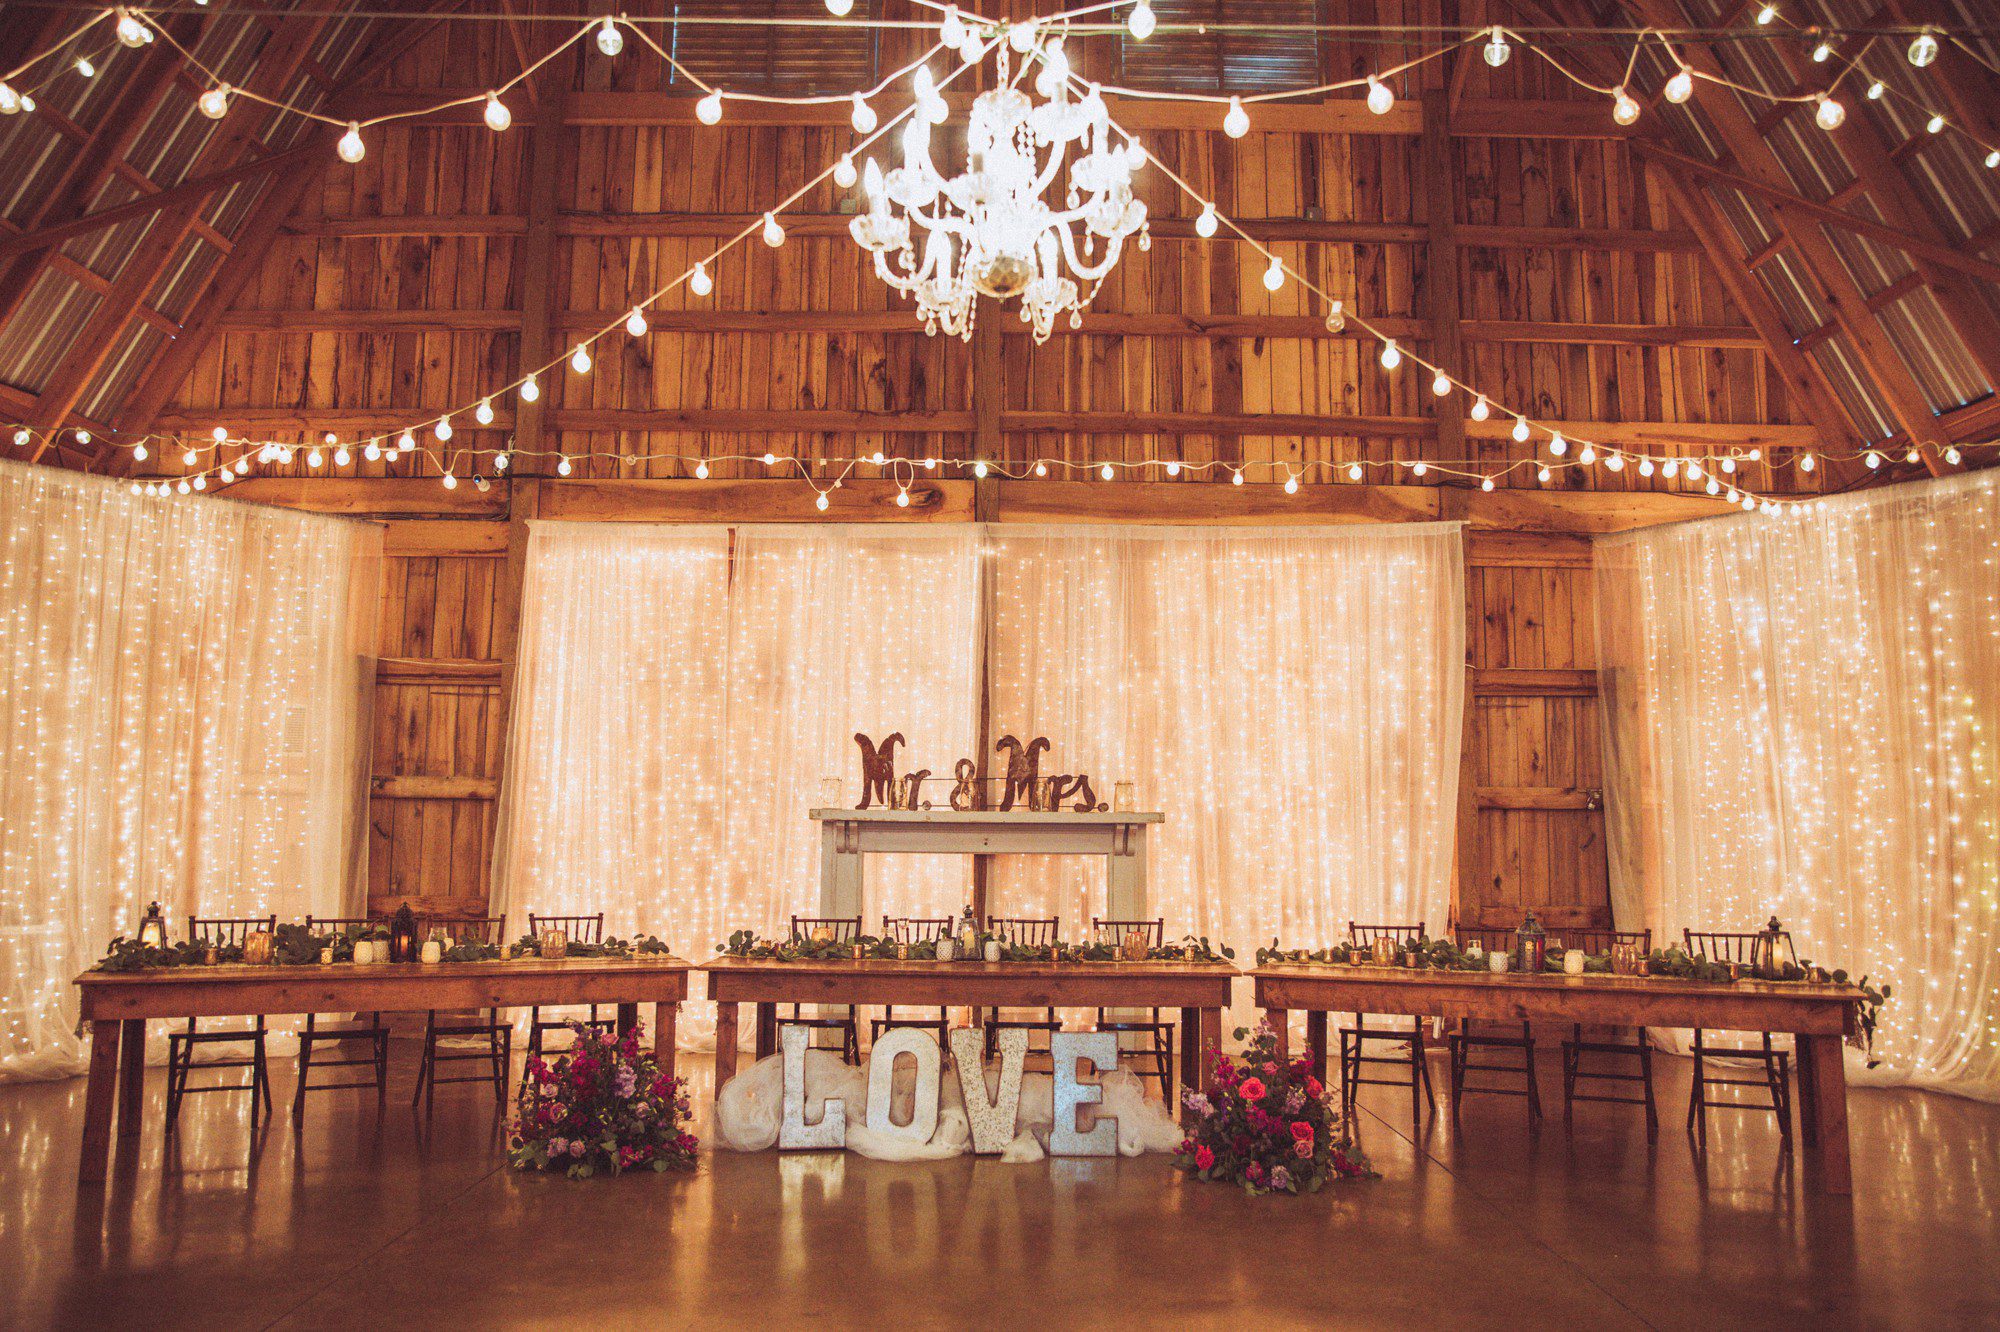 Rustic barn wedding decor with glam chandelier 